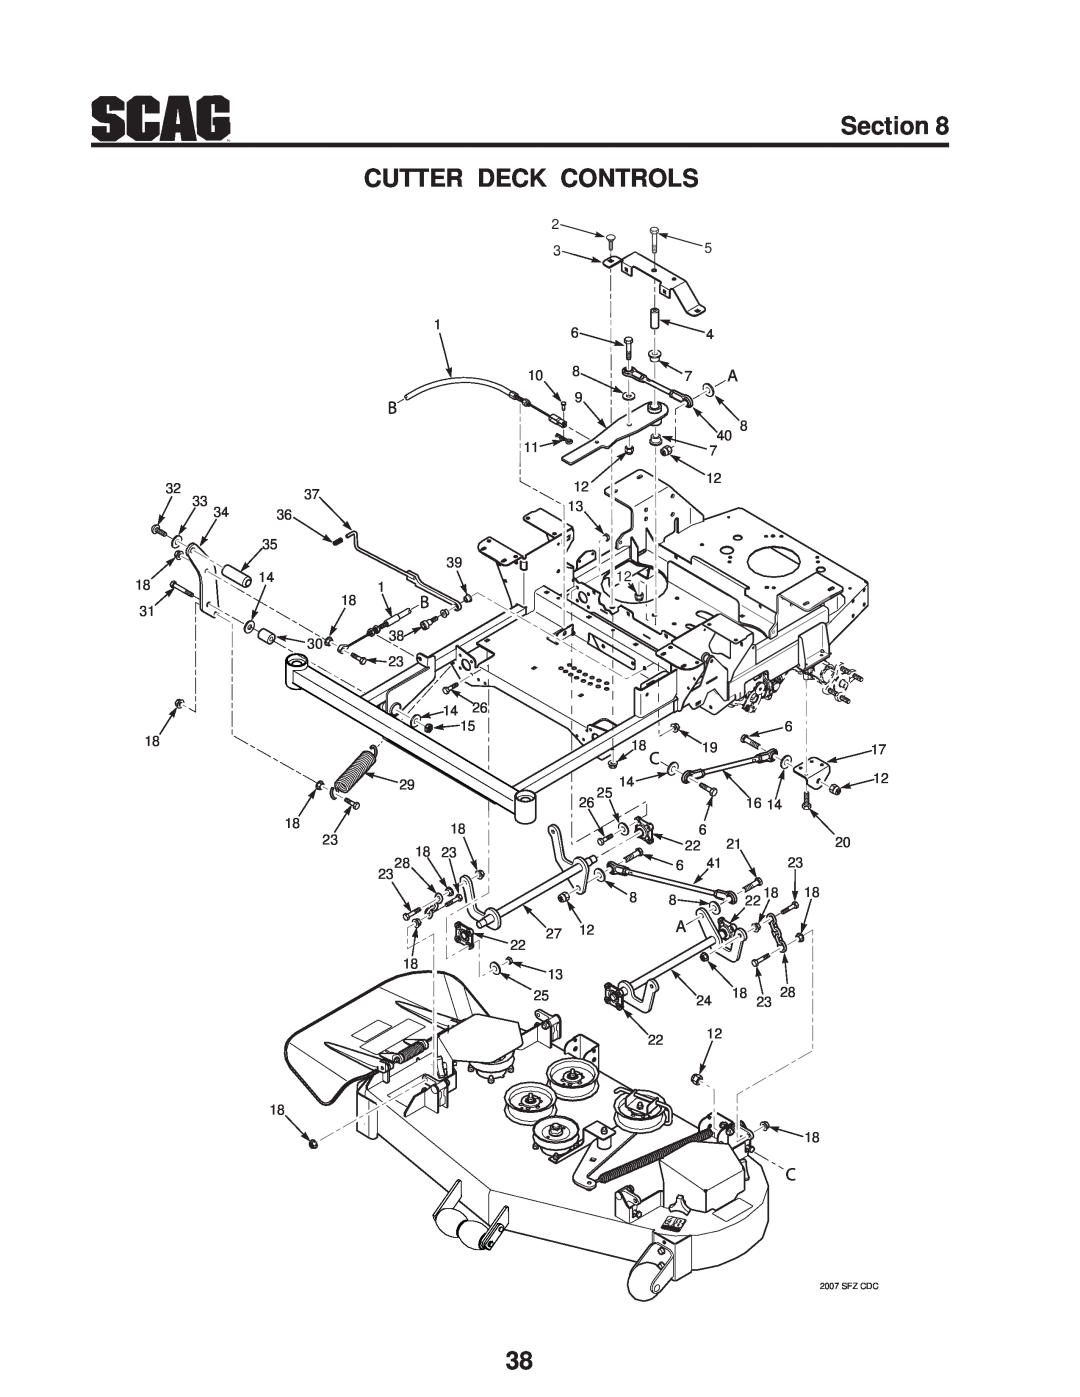 Scag Power Equipment SFZ manual Section CUTTER DECK CONTROLS, Sfz Cdc 